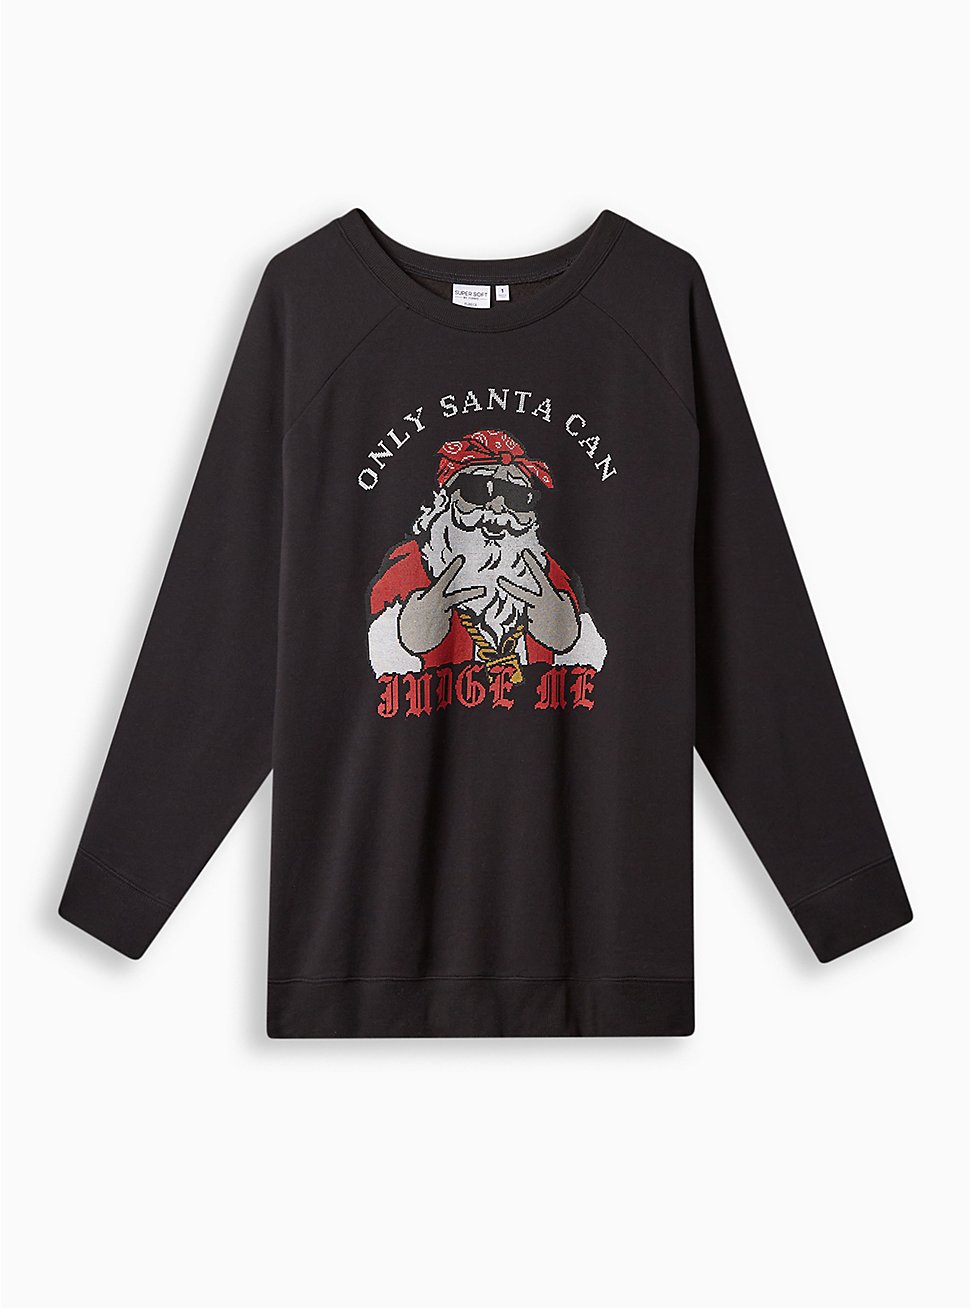 Plus Size Only Santa Can Judge Me Relaxed Fit Super Soft Fleece Crew Neck Tunic Sweatshirt , DEEP BLACK, hi-res